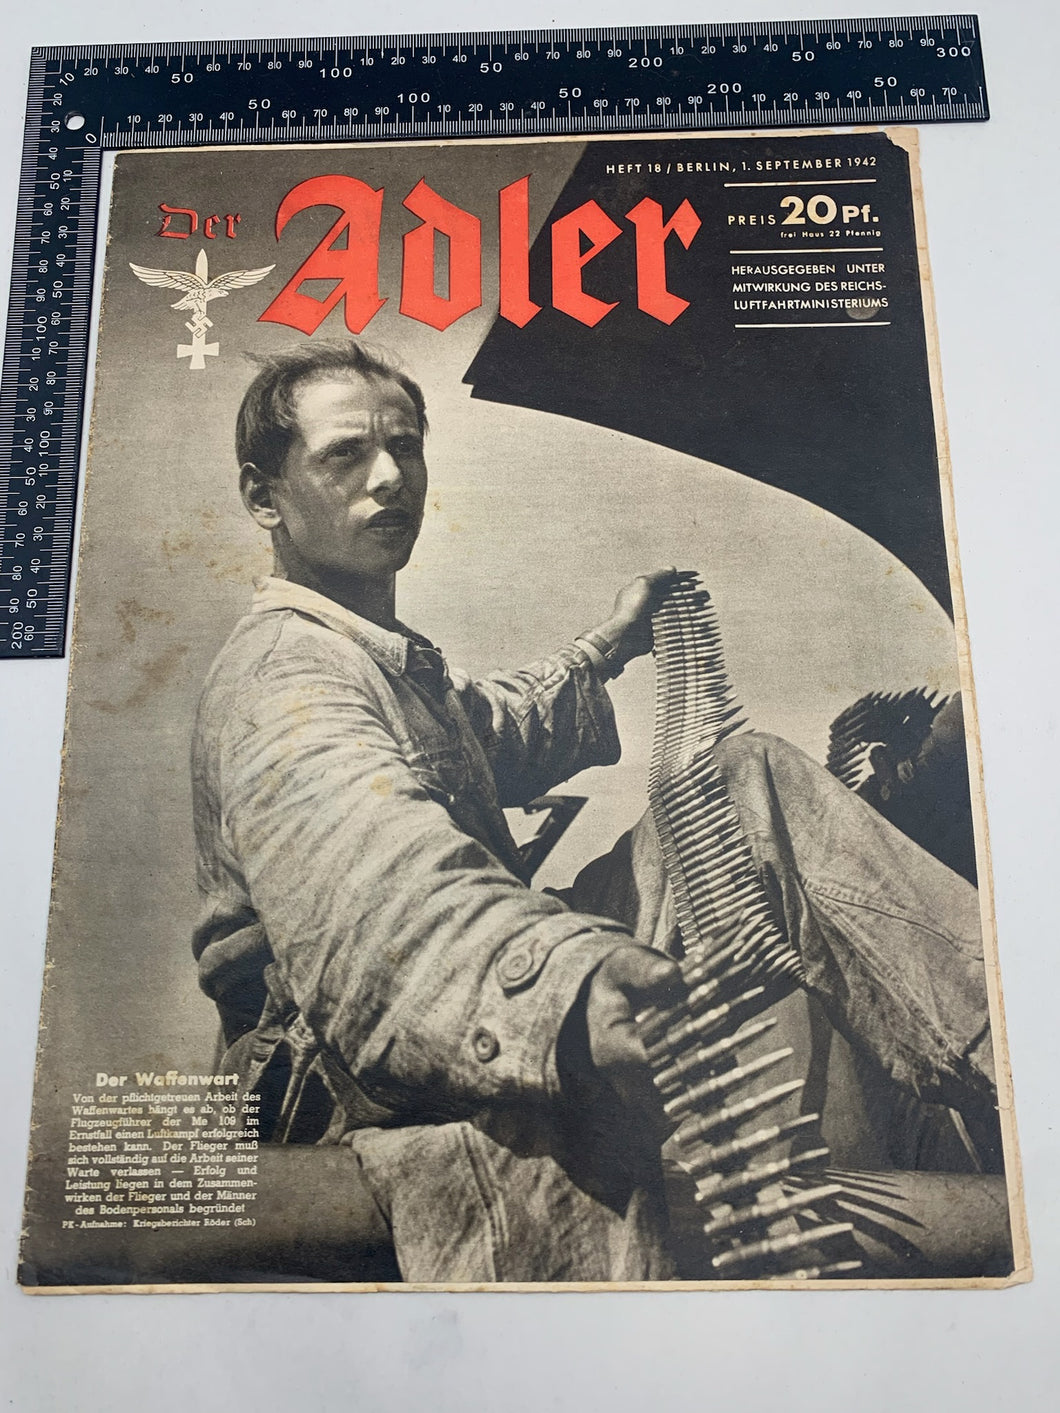 Der Adler Luftwaffe Magazine Original WW2 German - 1st September 1942